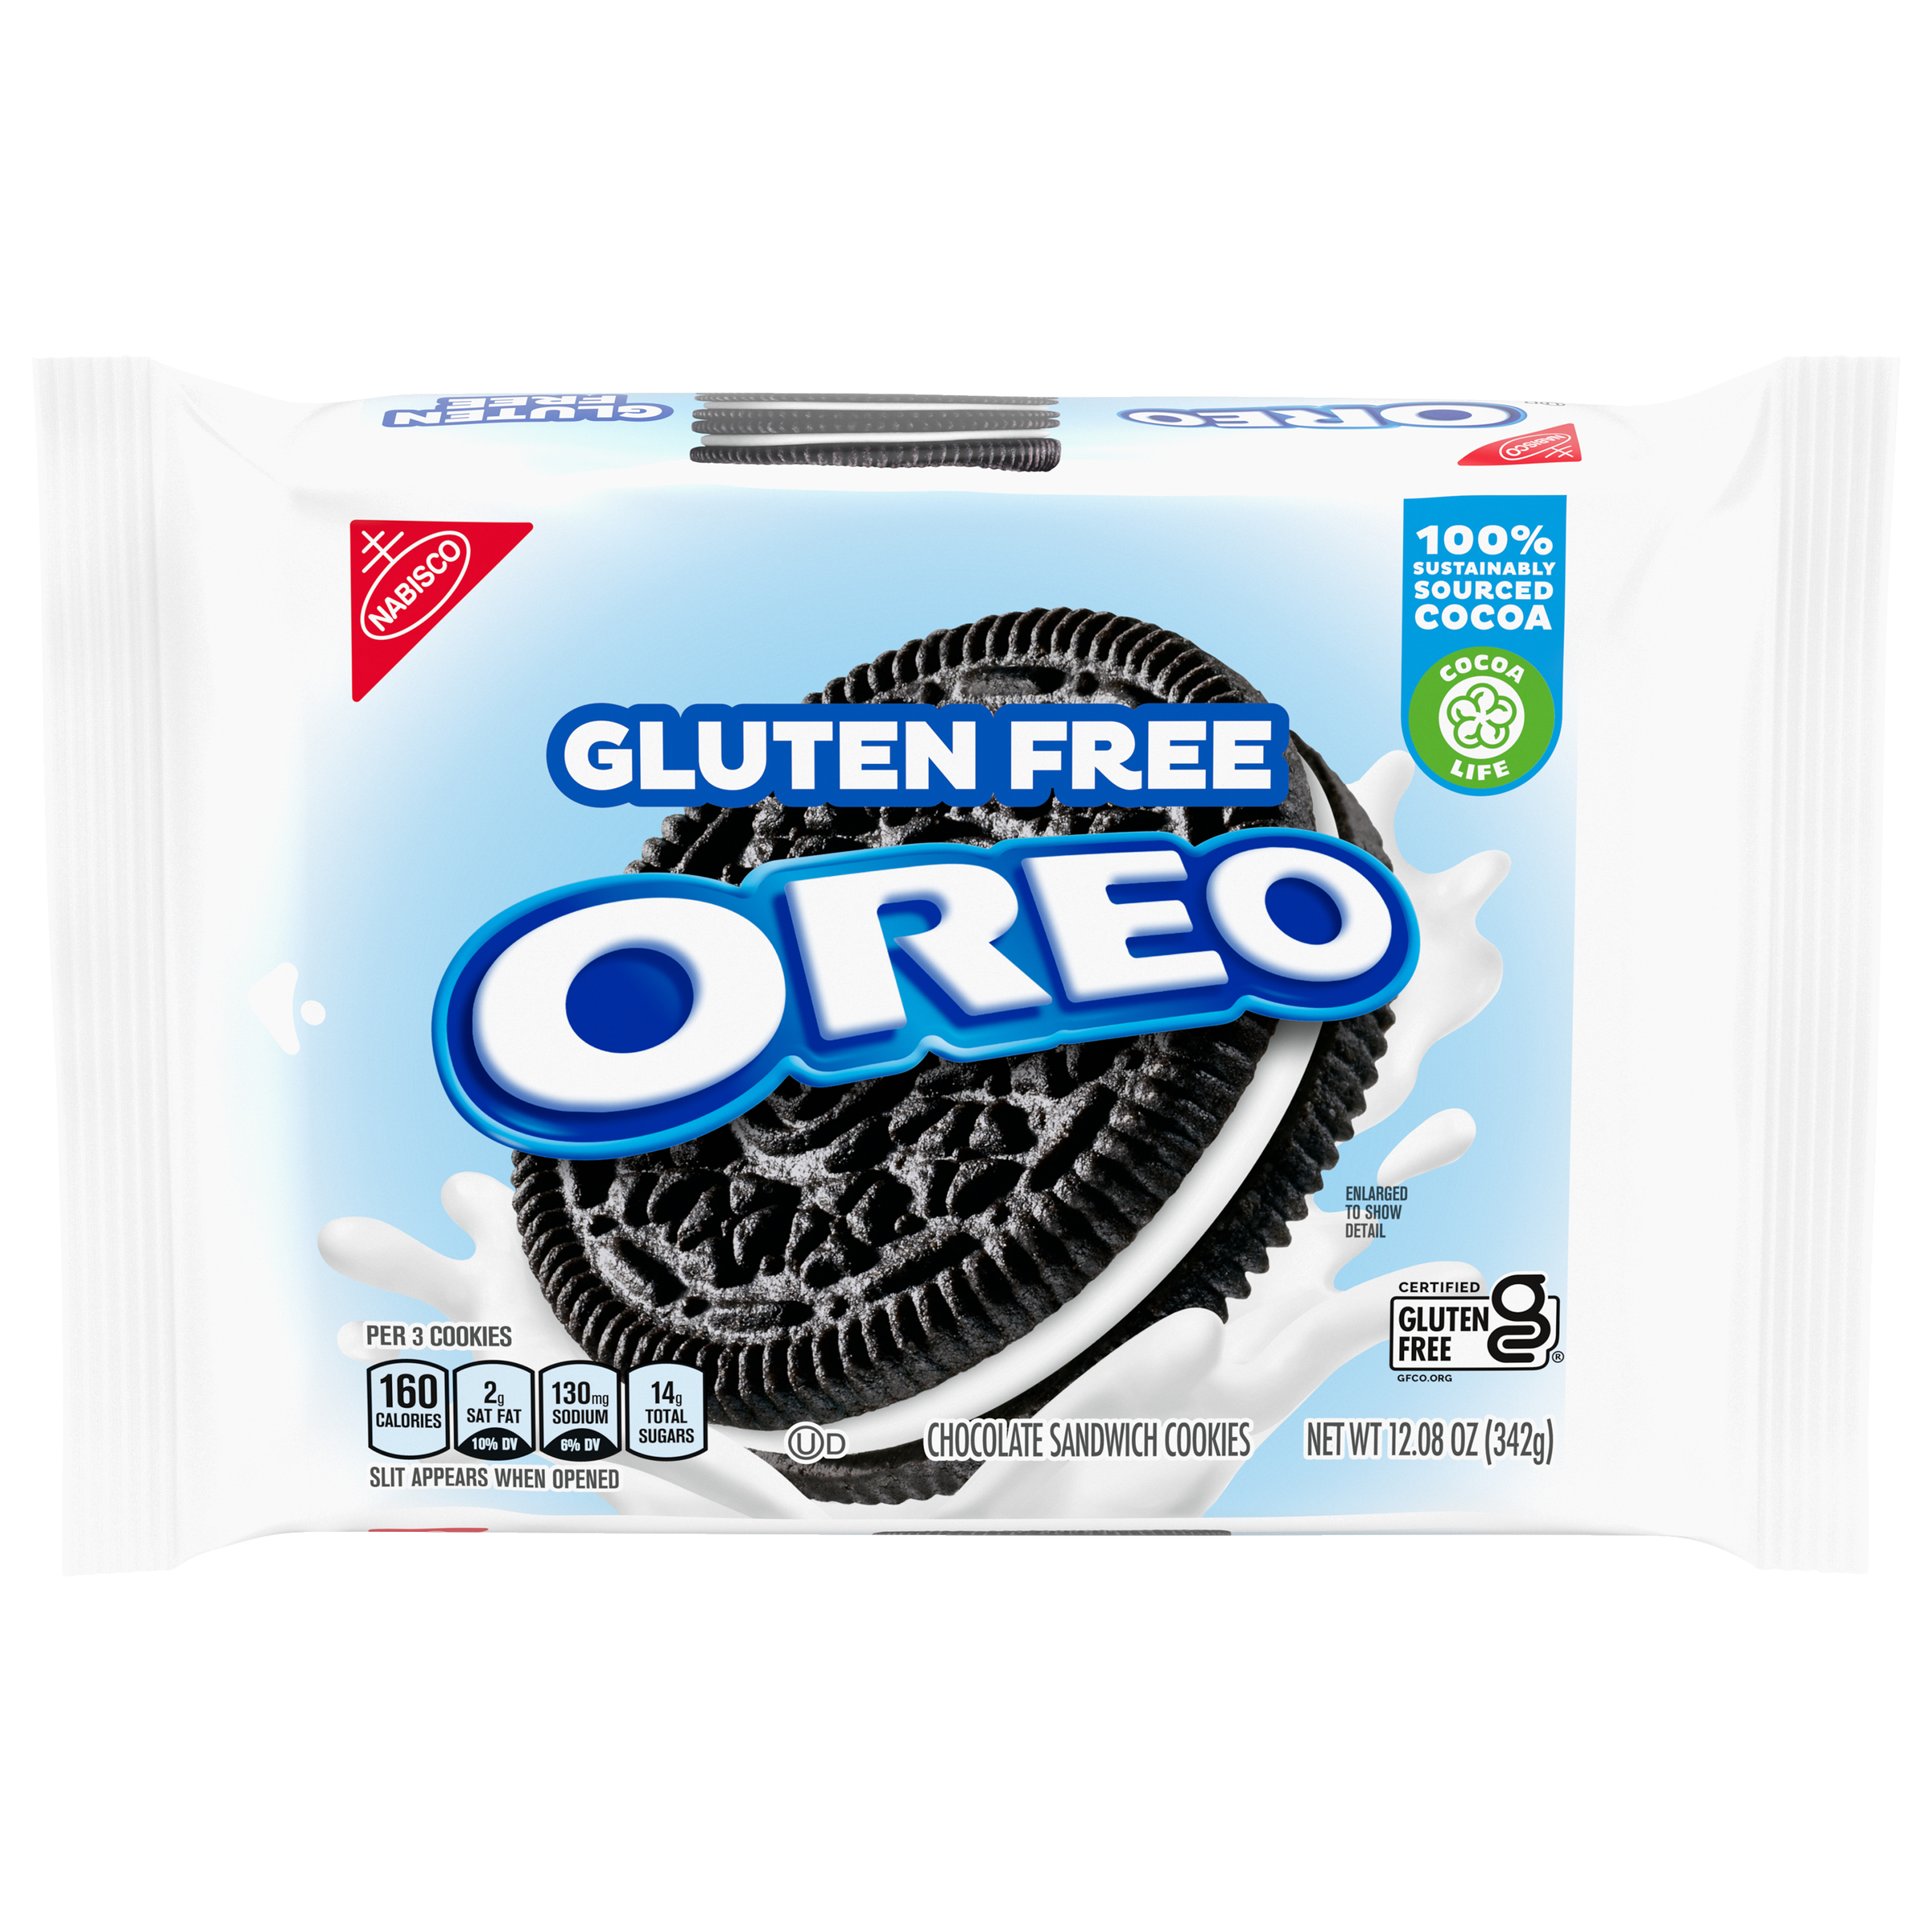 OREO Gluten Free Cookies 0.76 LB